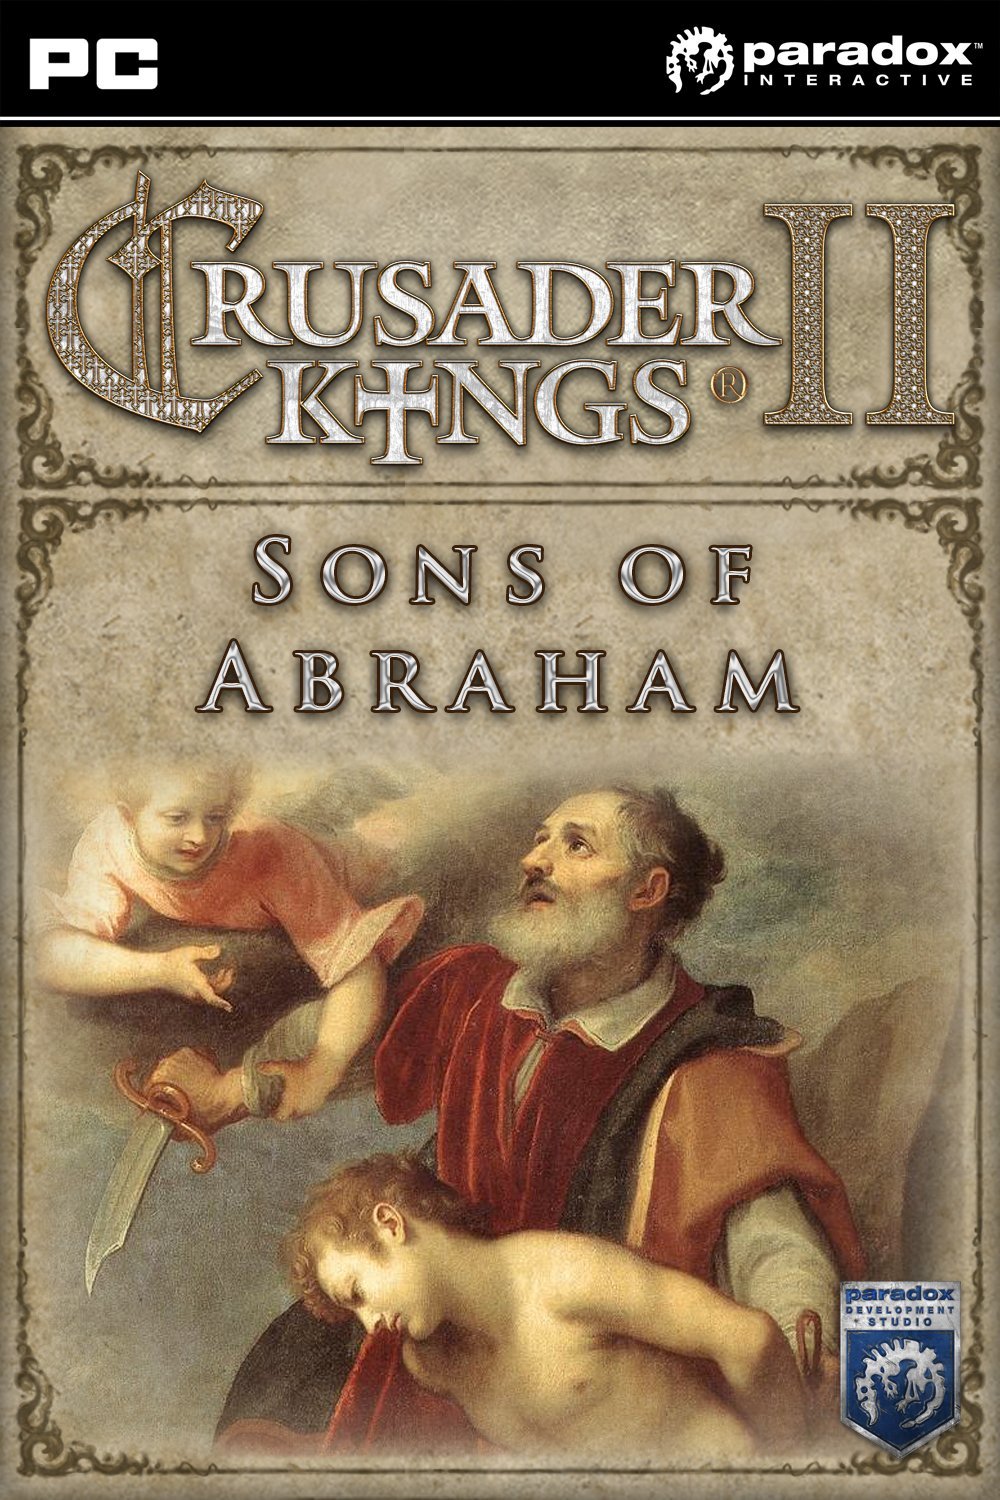 Image of Crusader Kings II: Sons of Abraham